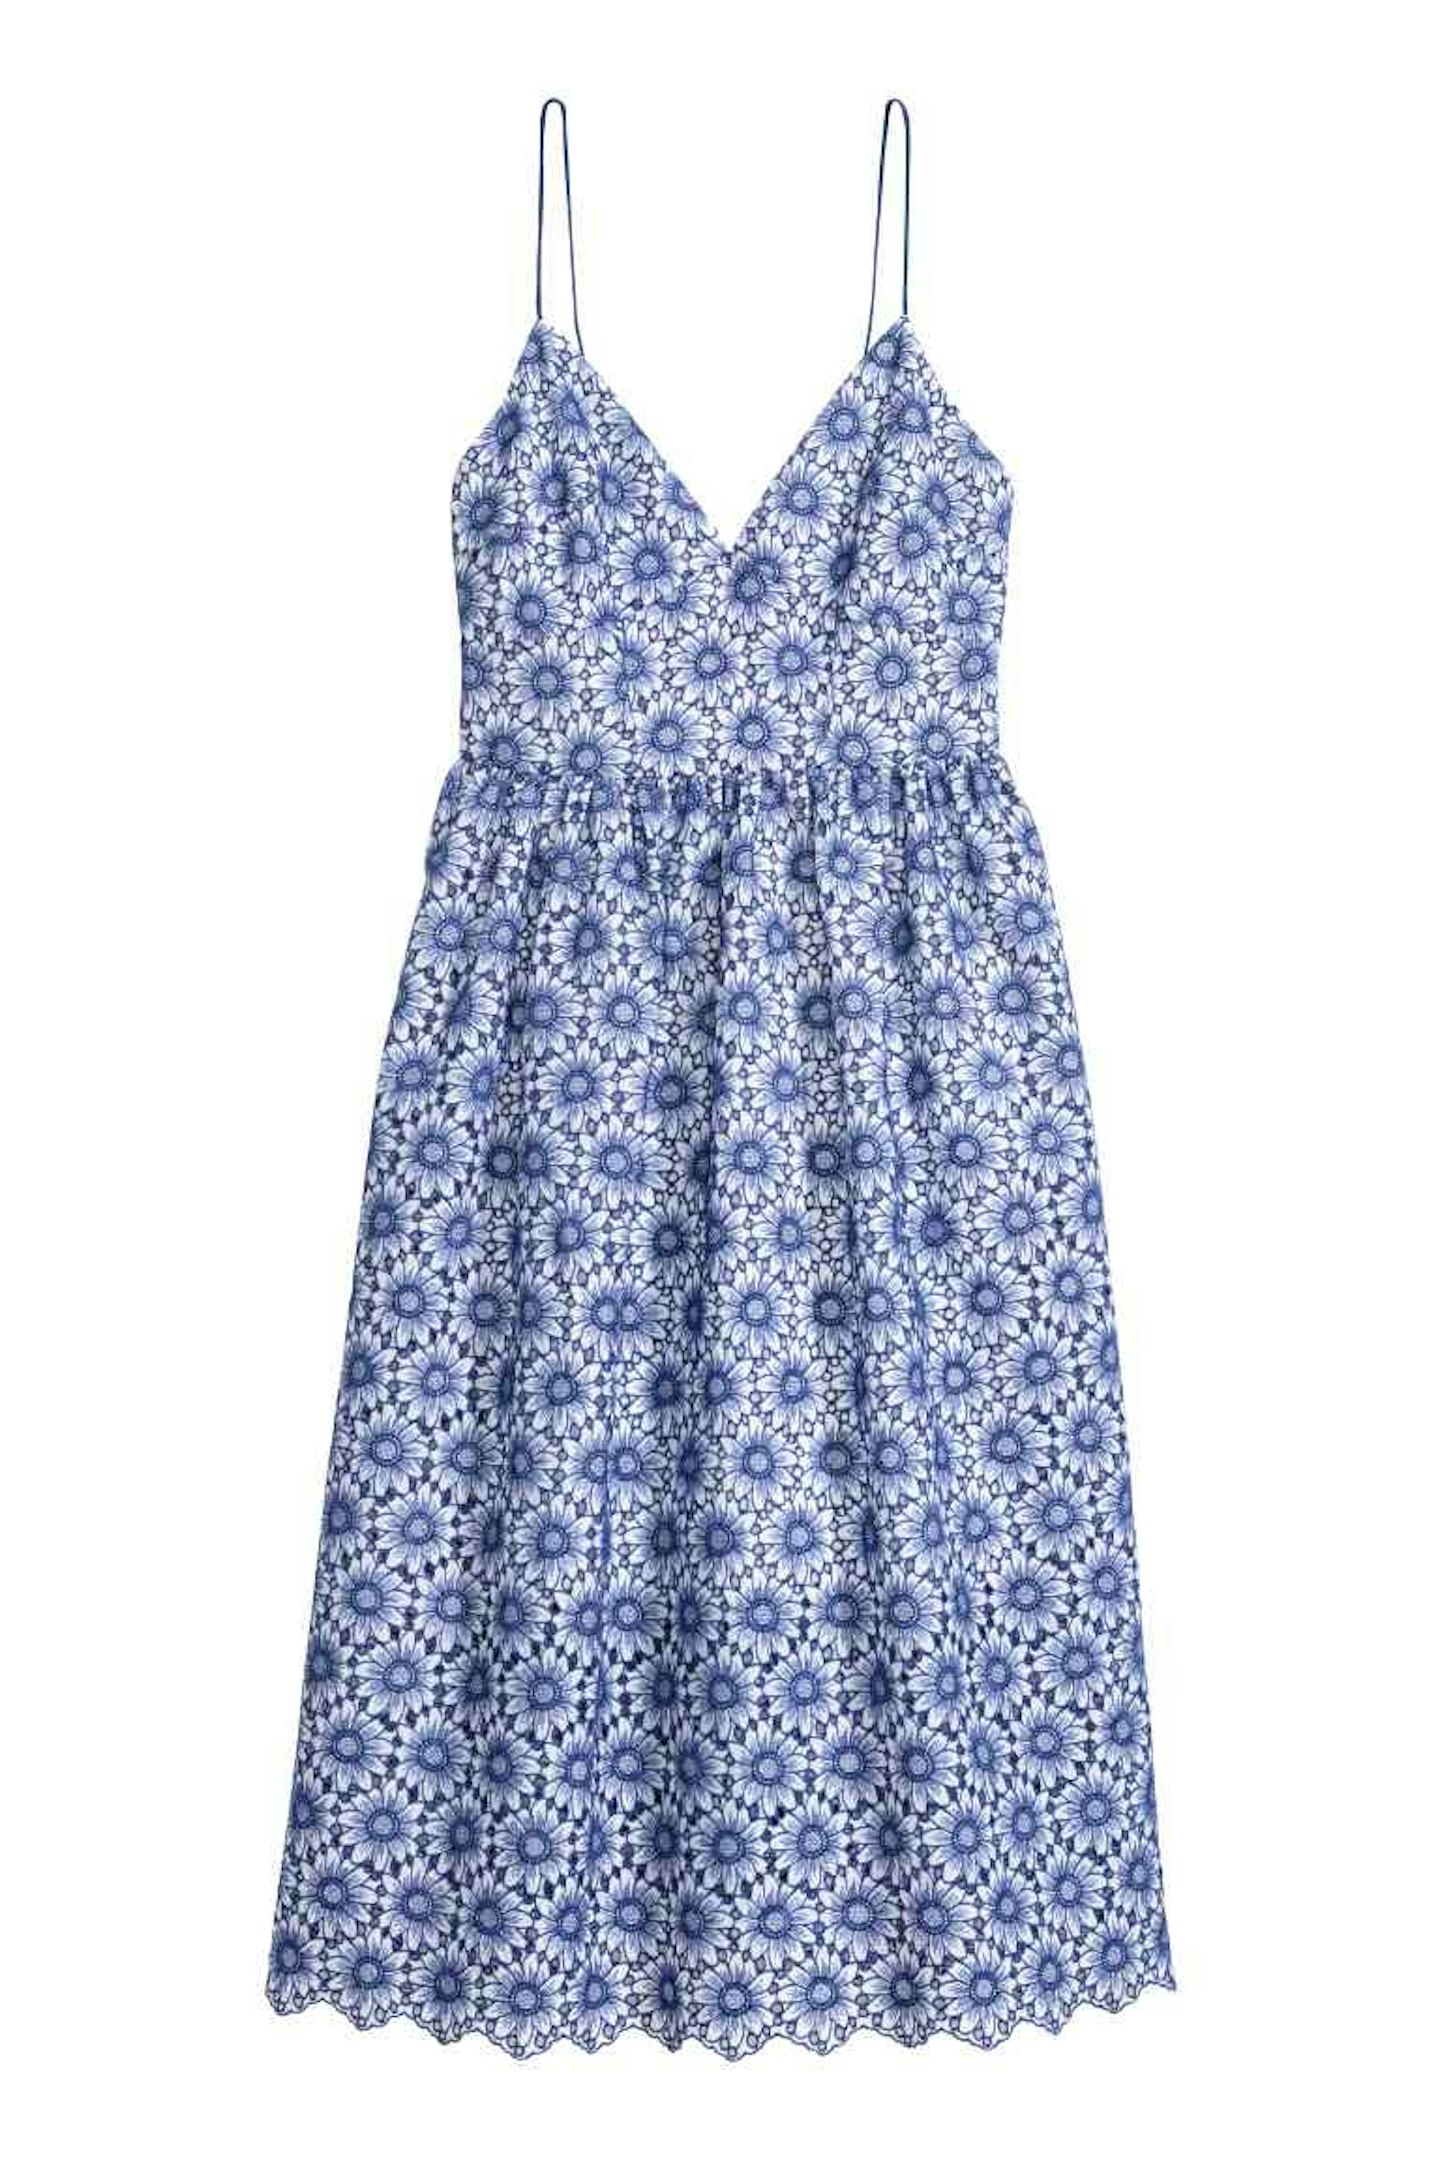 h&m-printed-blue-dress-pattern